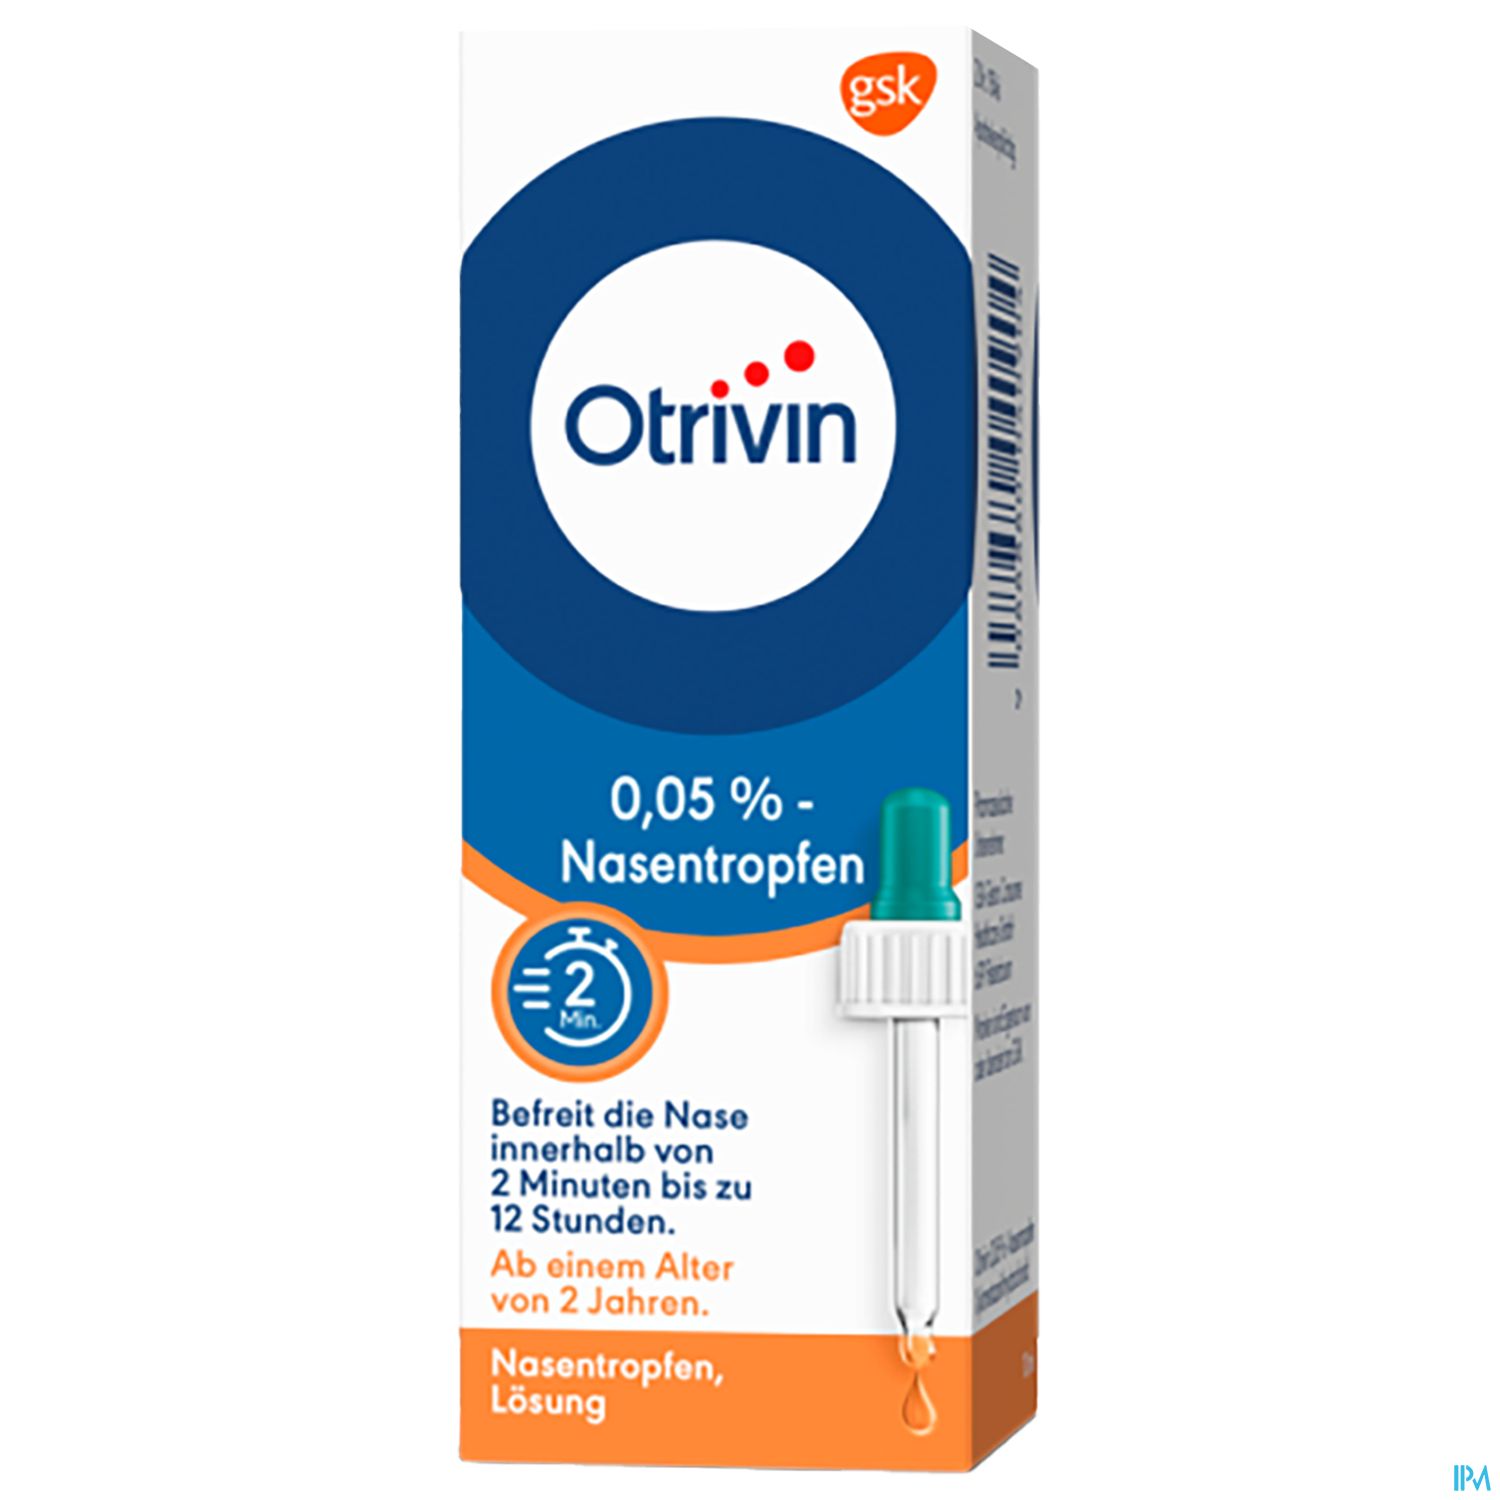 Otrivin 0,05 % - Nasentropfen